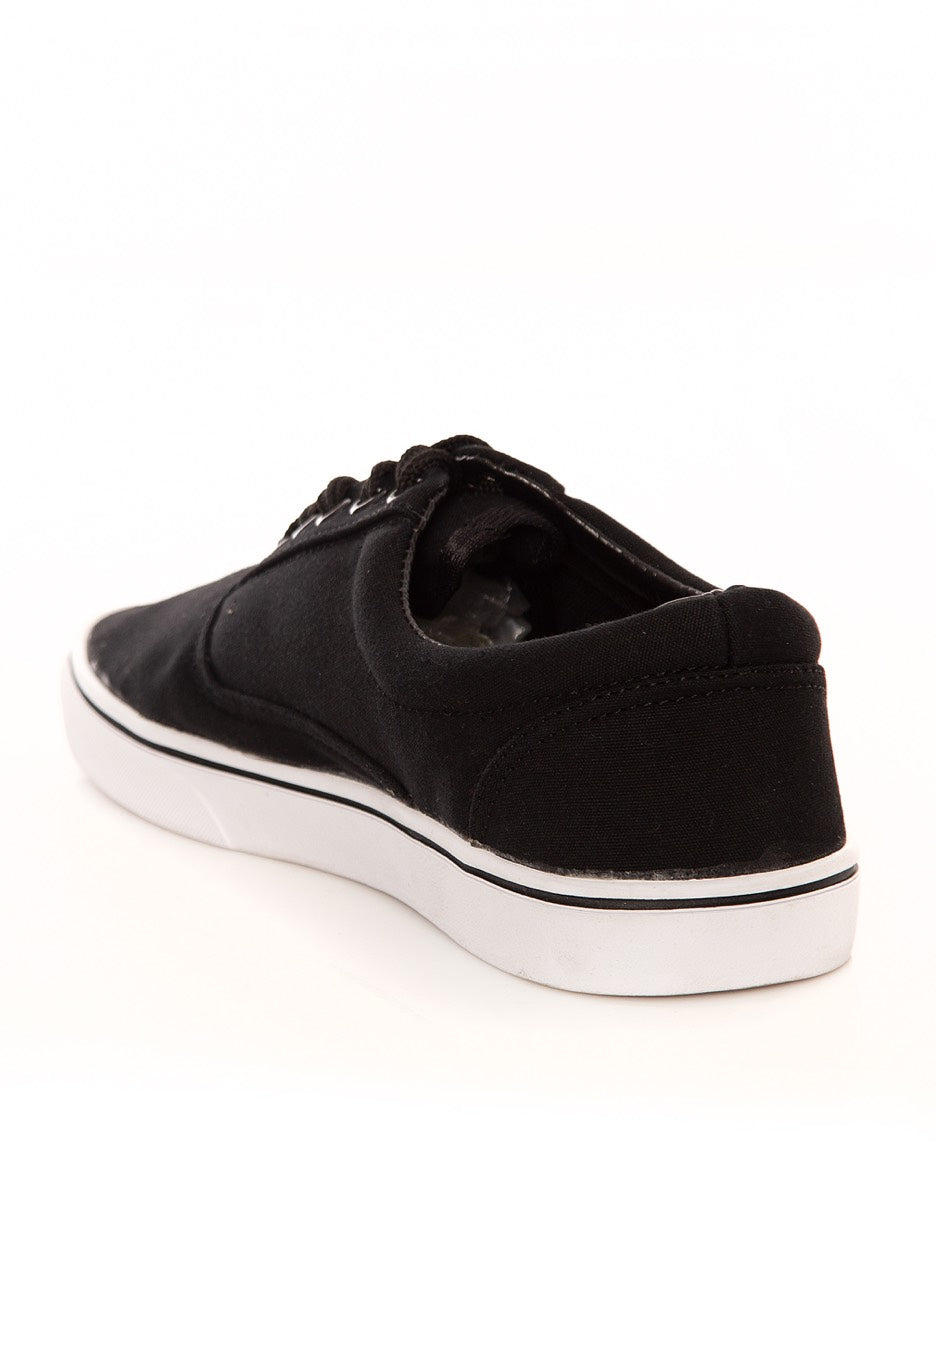 Brandit - Bayside Black/White - Shoes